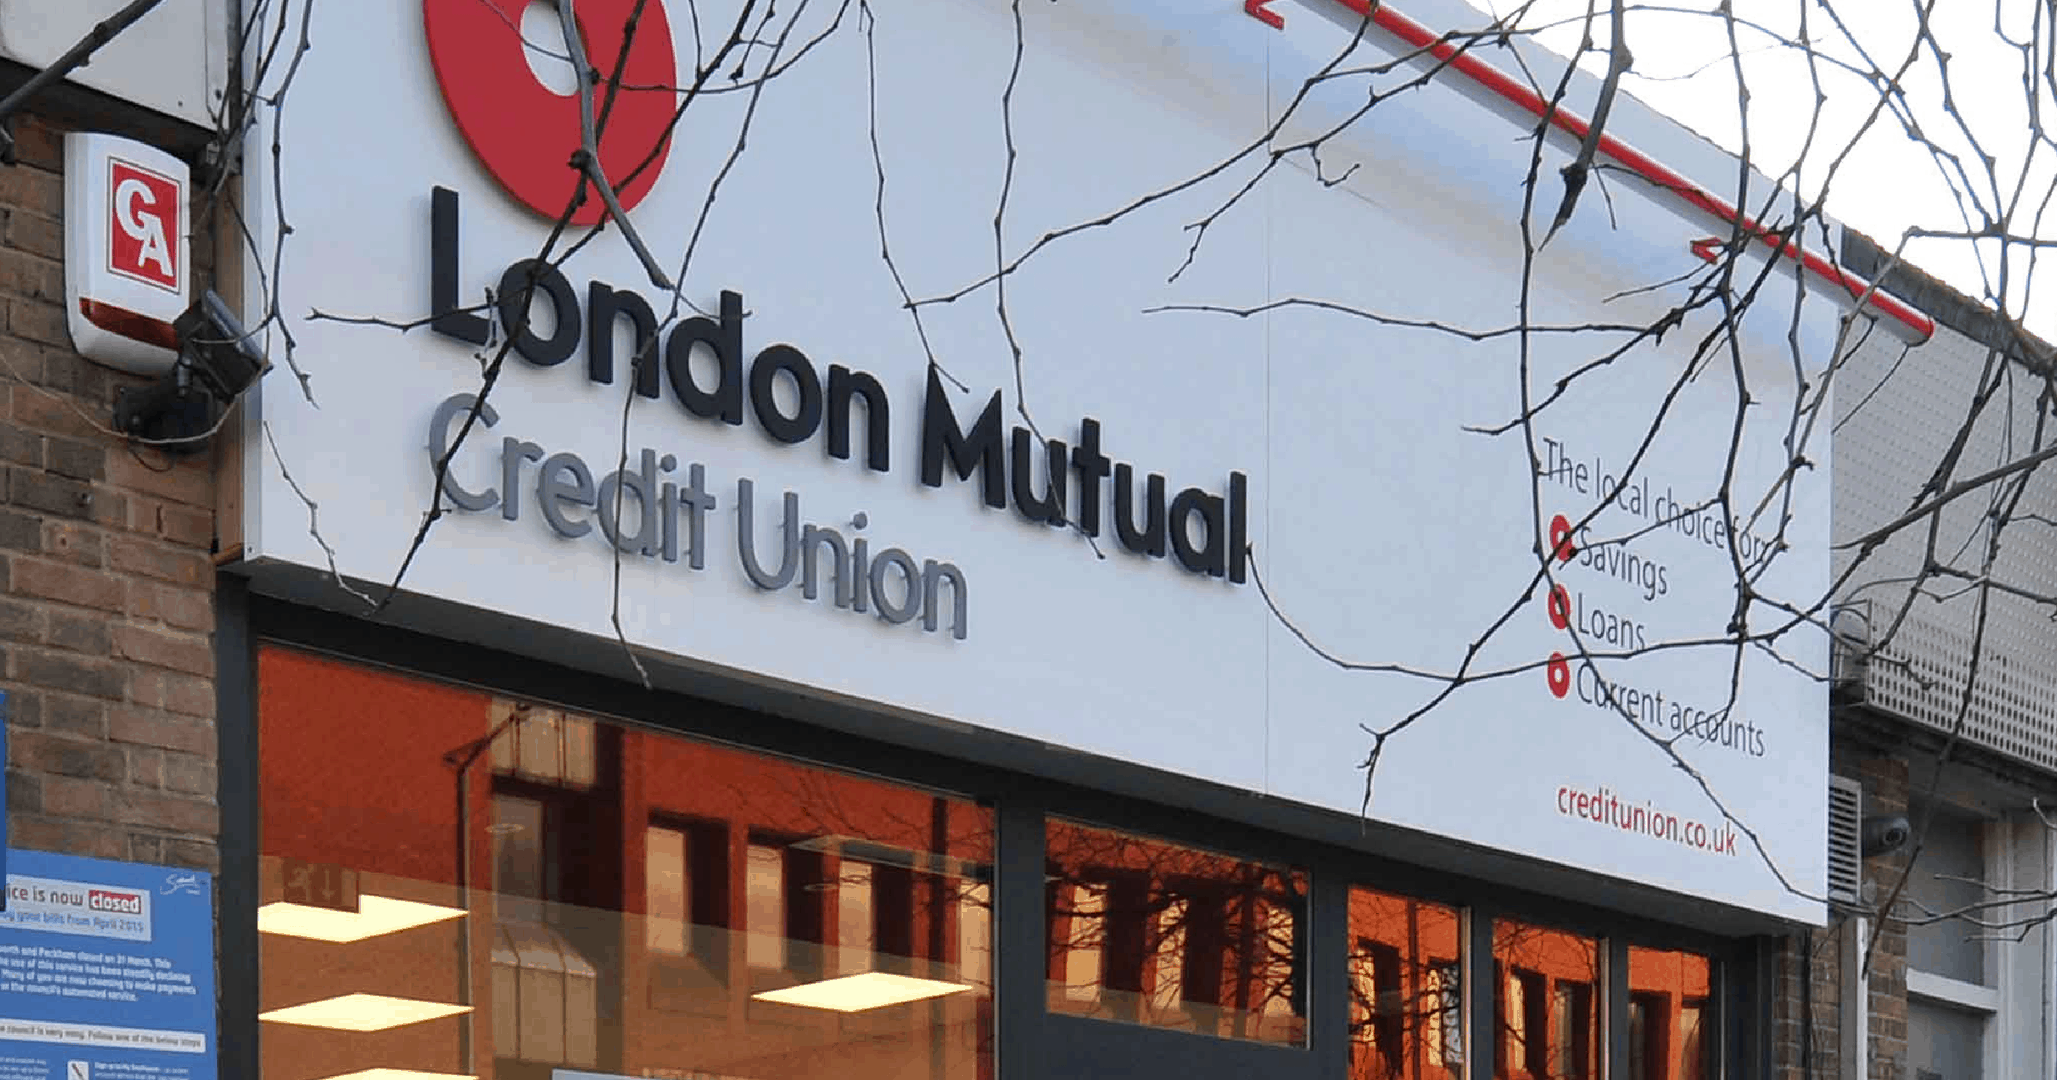 London Mutual Credit Union Walworth Road Branch